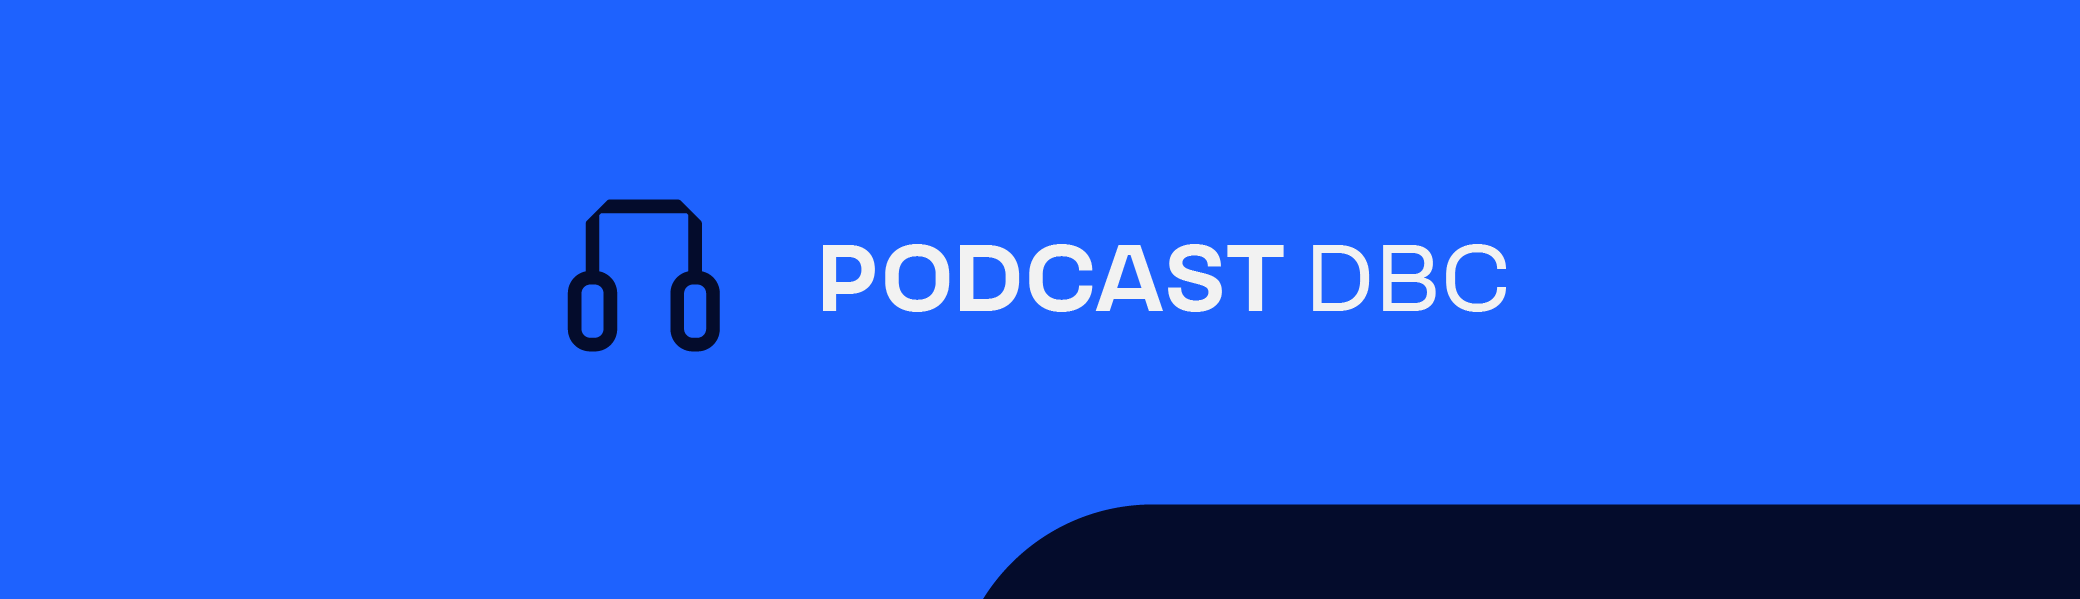 Podcast DBC